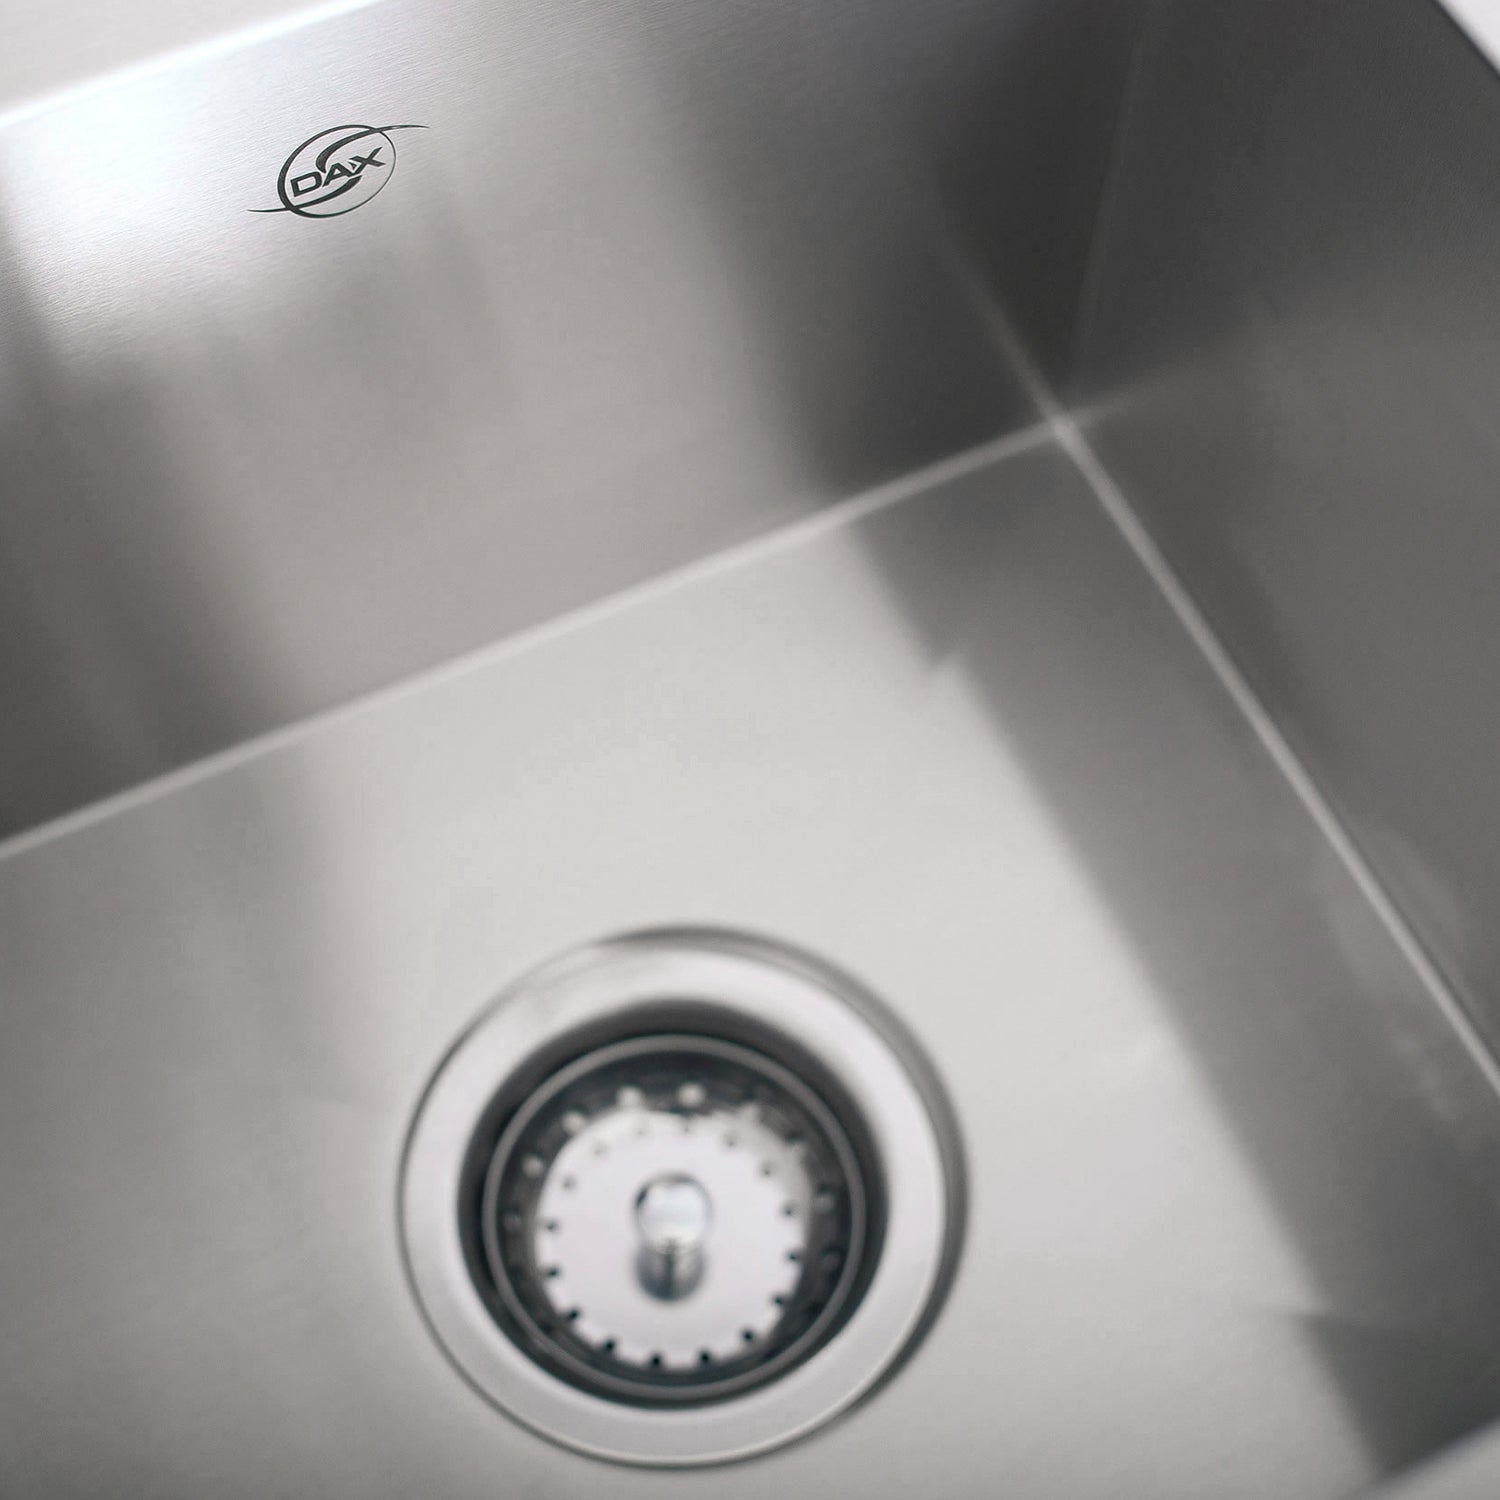 DAX Handmade Single Bowl Undermount Kitchen Sink, 16 Gauge Stainless Steel, Brushed Finish, 15 x 12-1/2 x 8 Inches (DAX-SQ-1512)